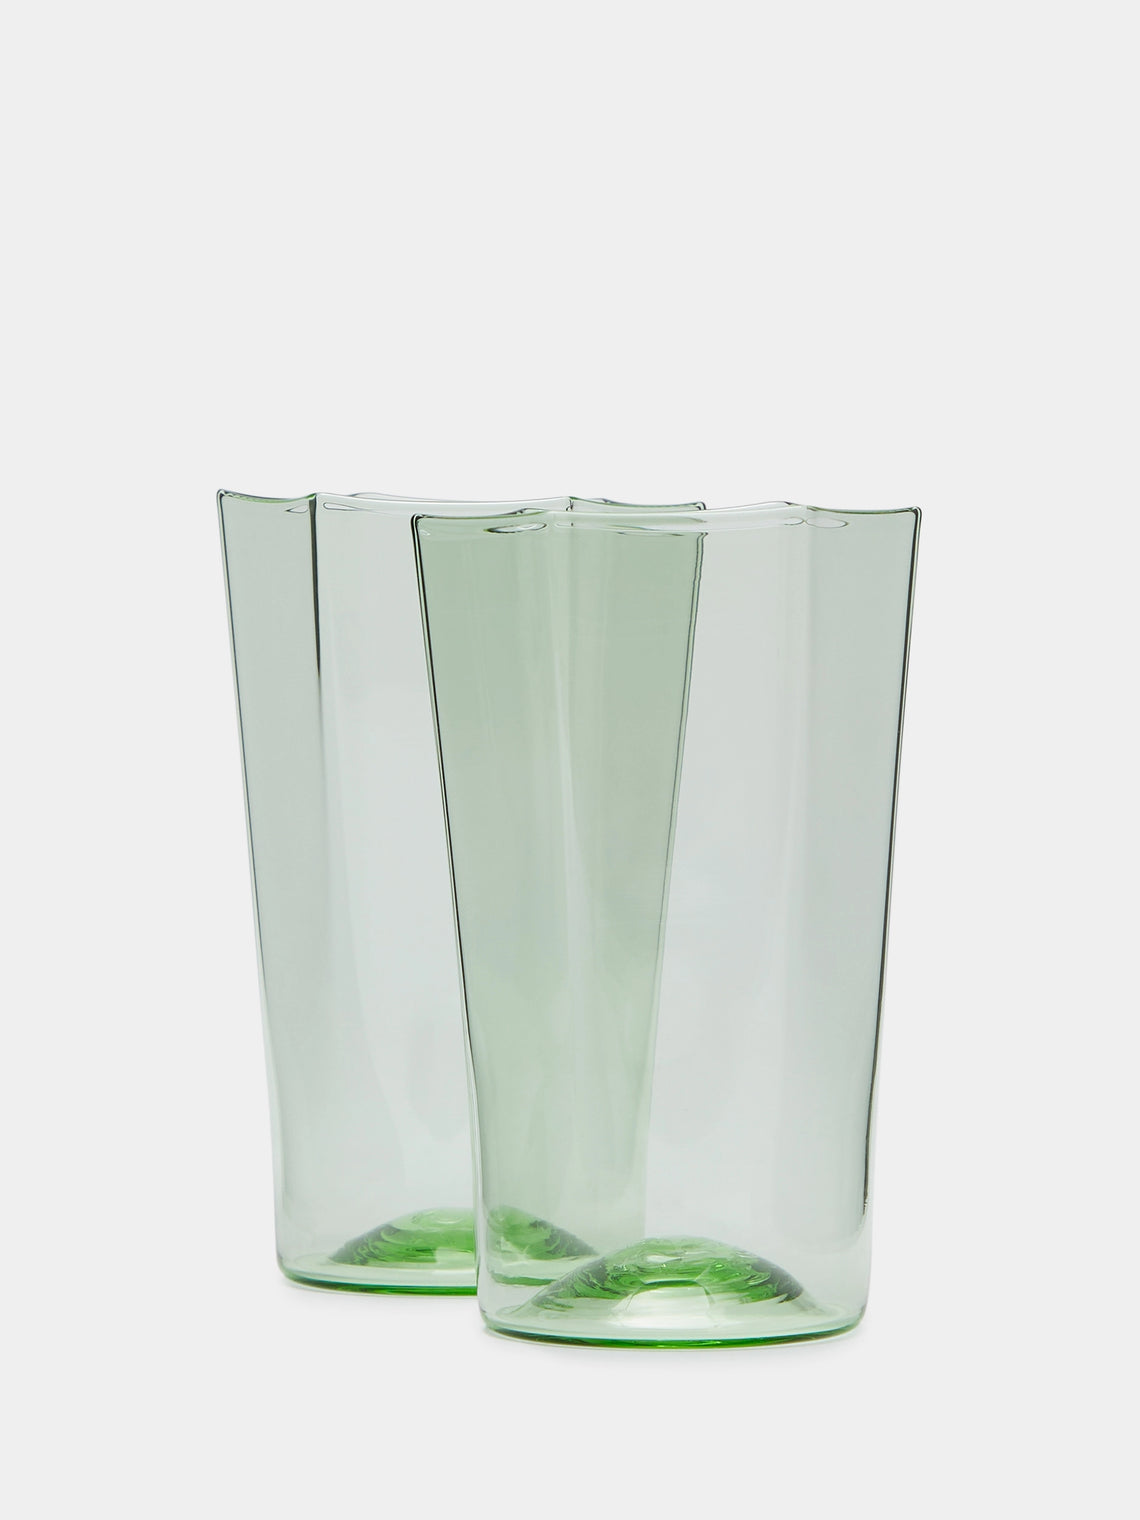 Yali Glass - Venexia Small Tumbler - Green - ABASK